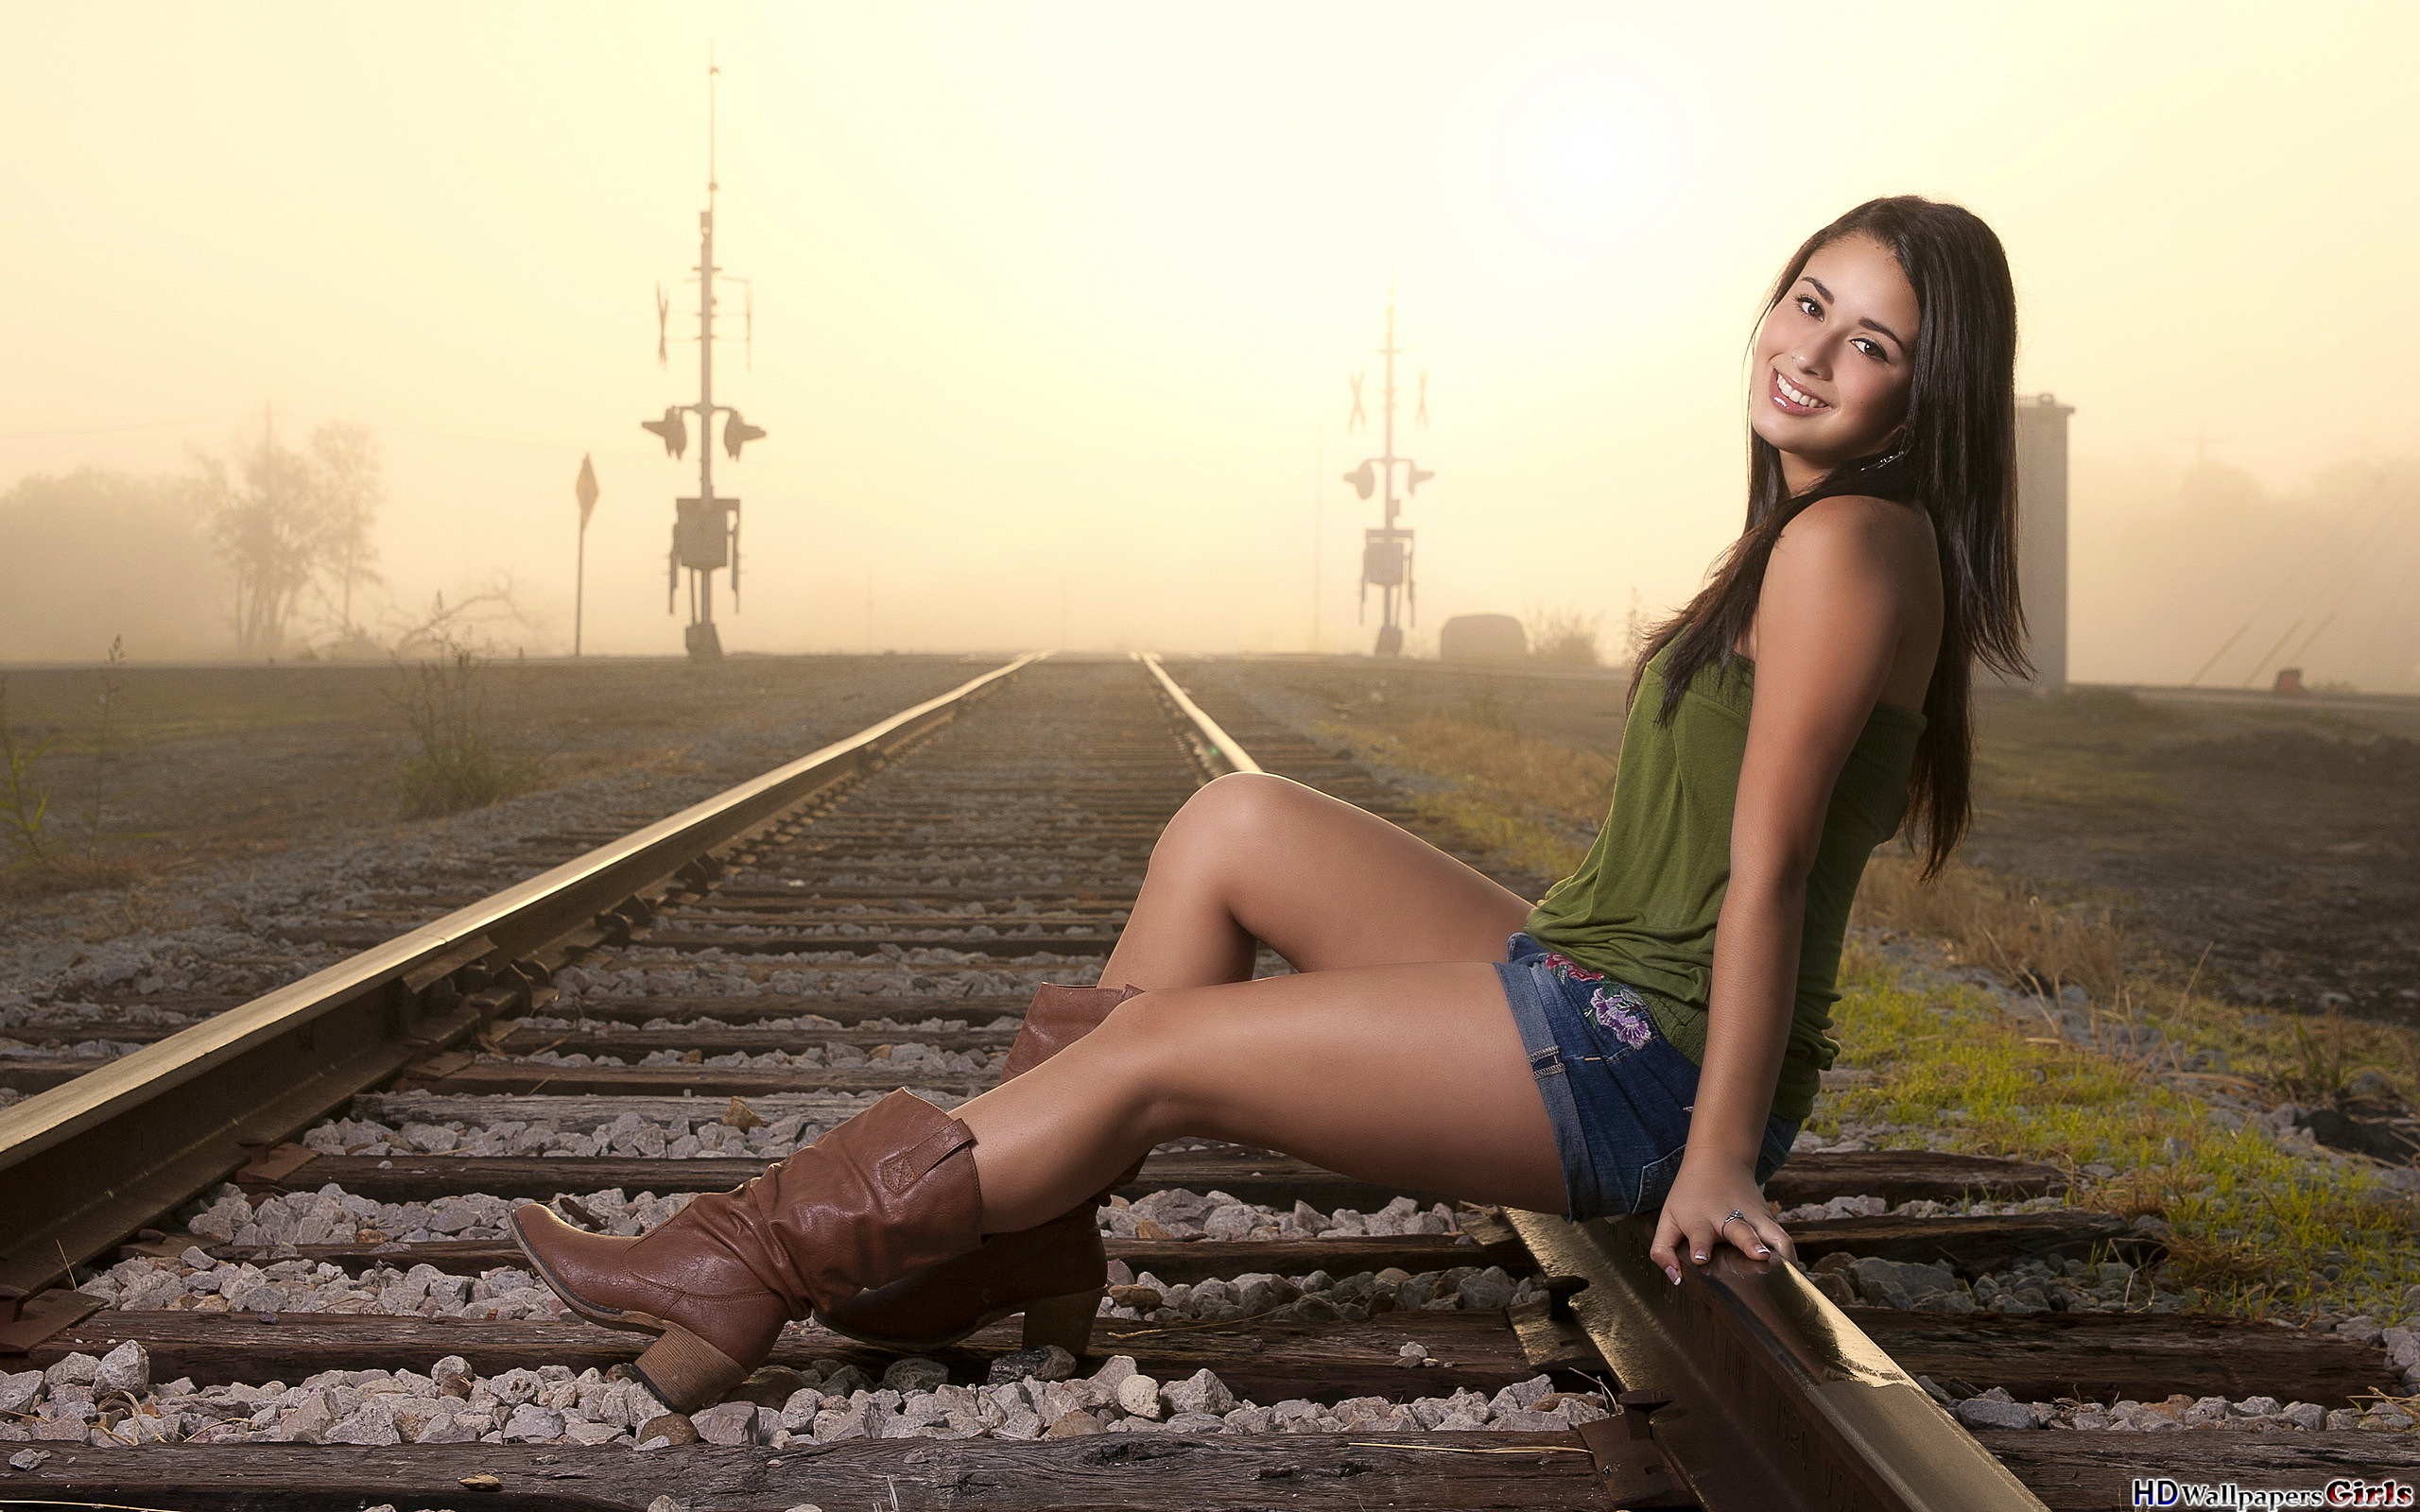 women model sitting boots jean shorts rail yard smiling shorts railway Wallpaper